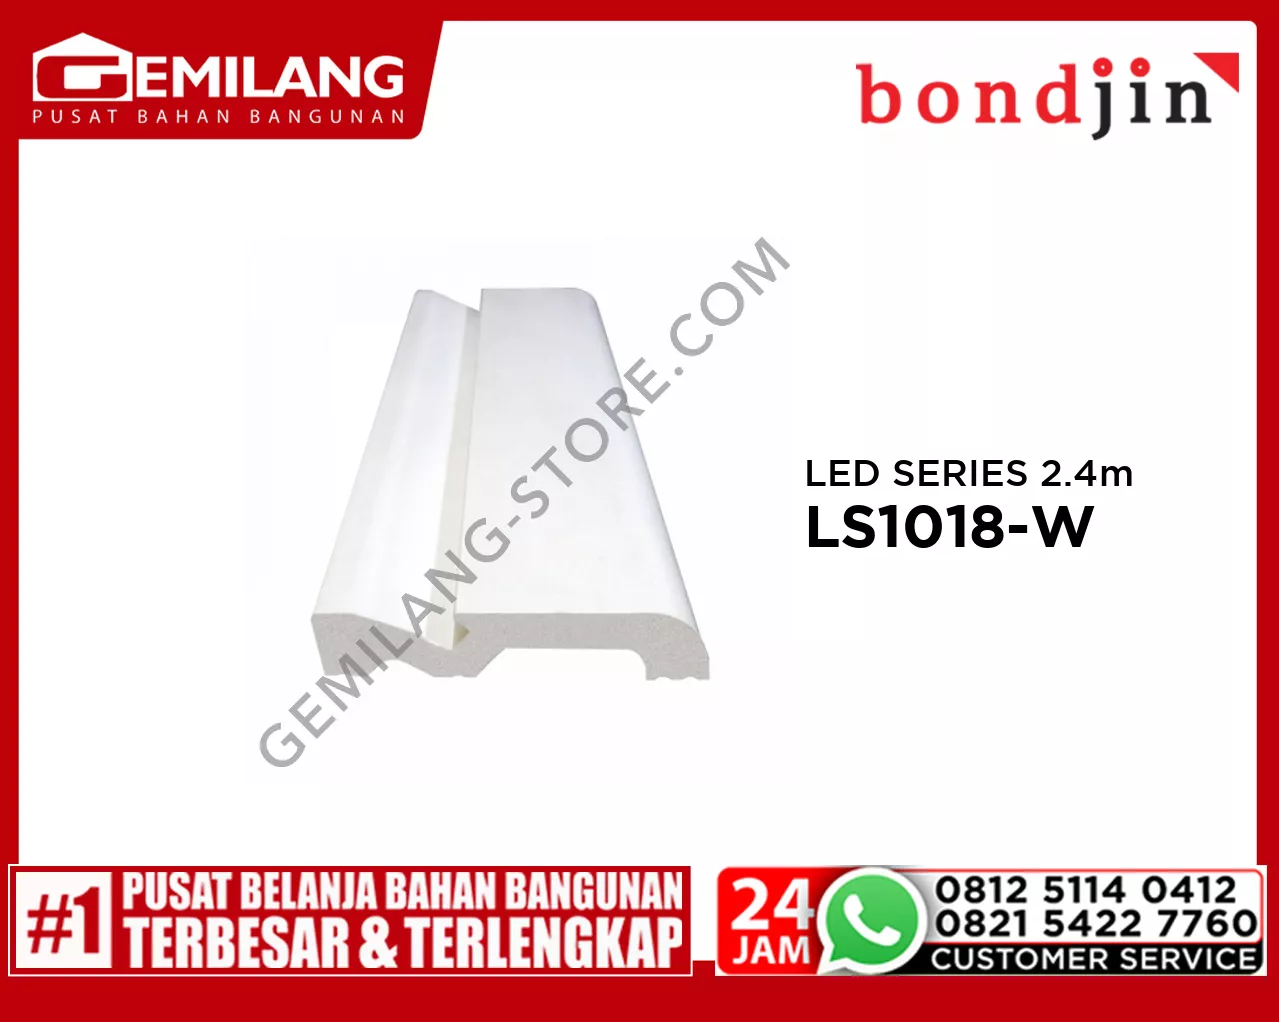 BONDJIN LED SERIES 2.4M LS1018-W